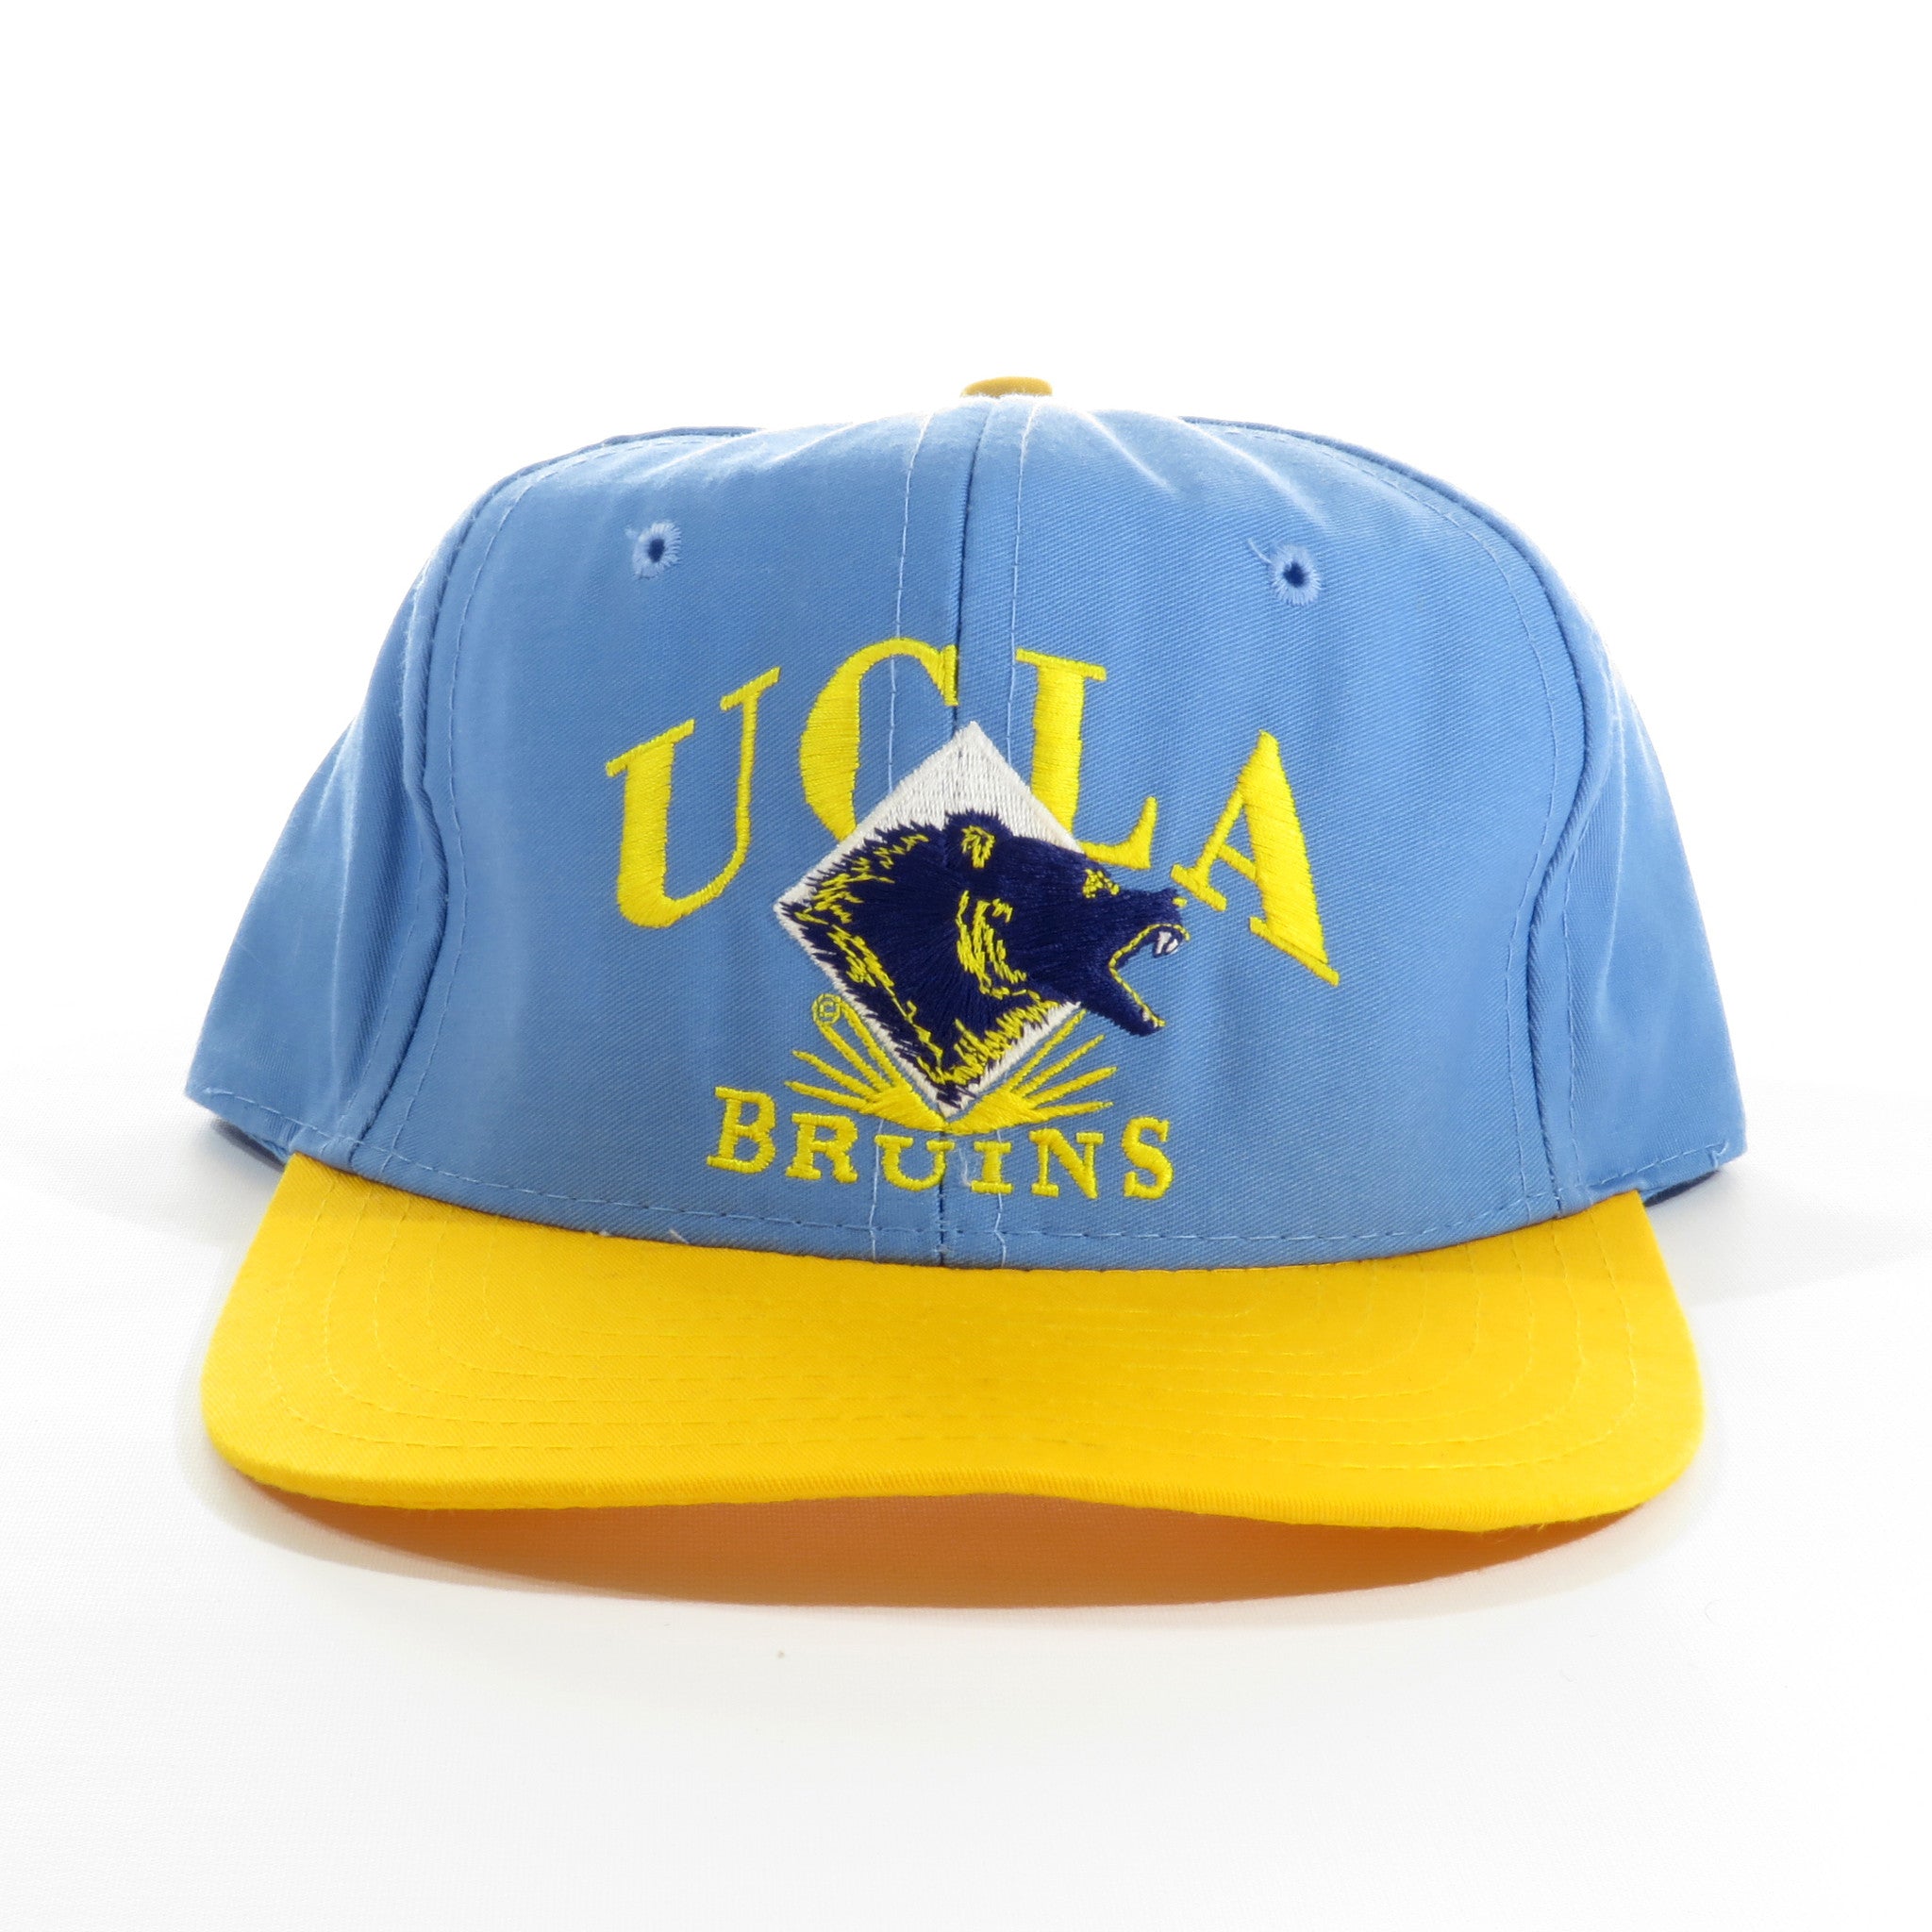 UCLA Bruins Youngan Snapback Hat